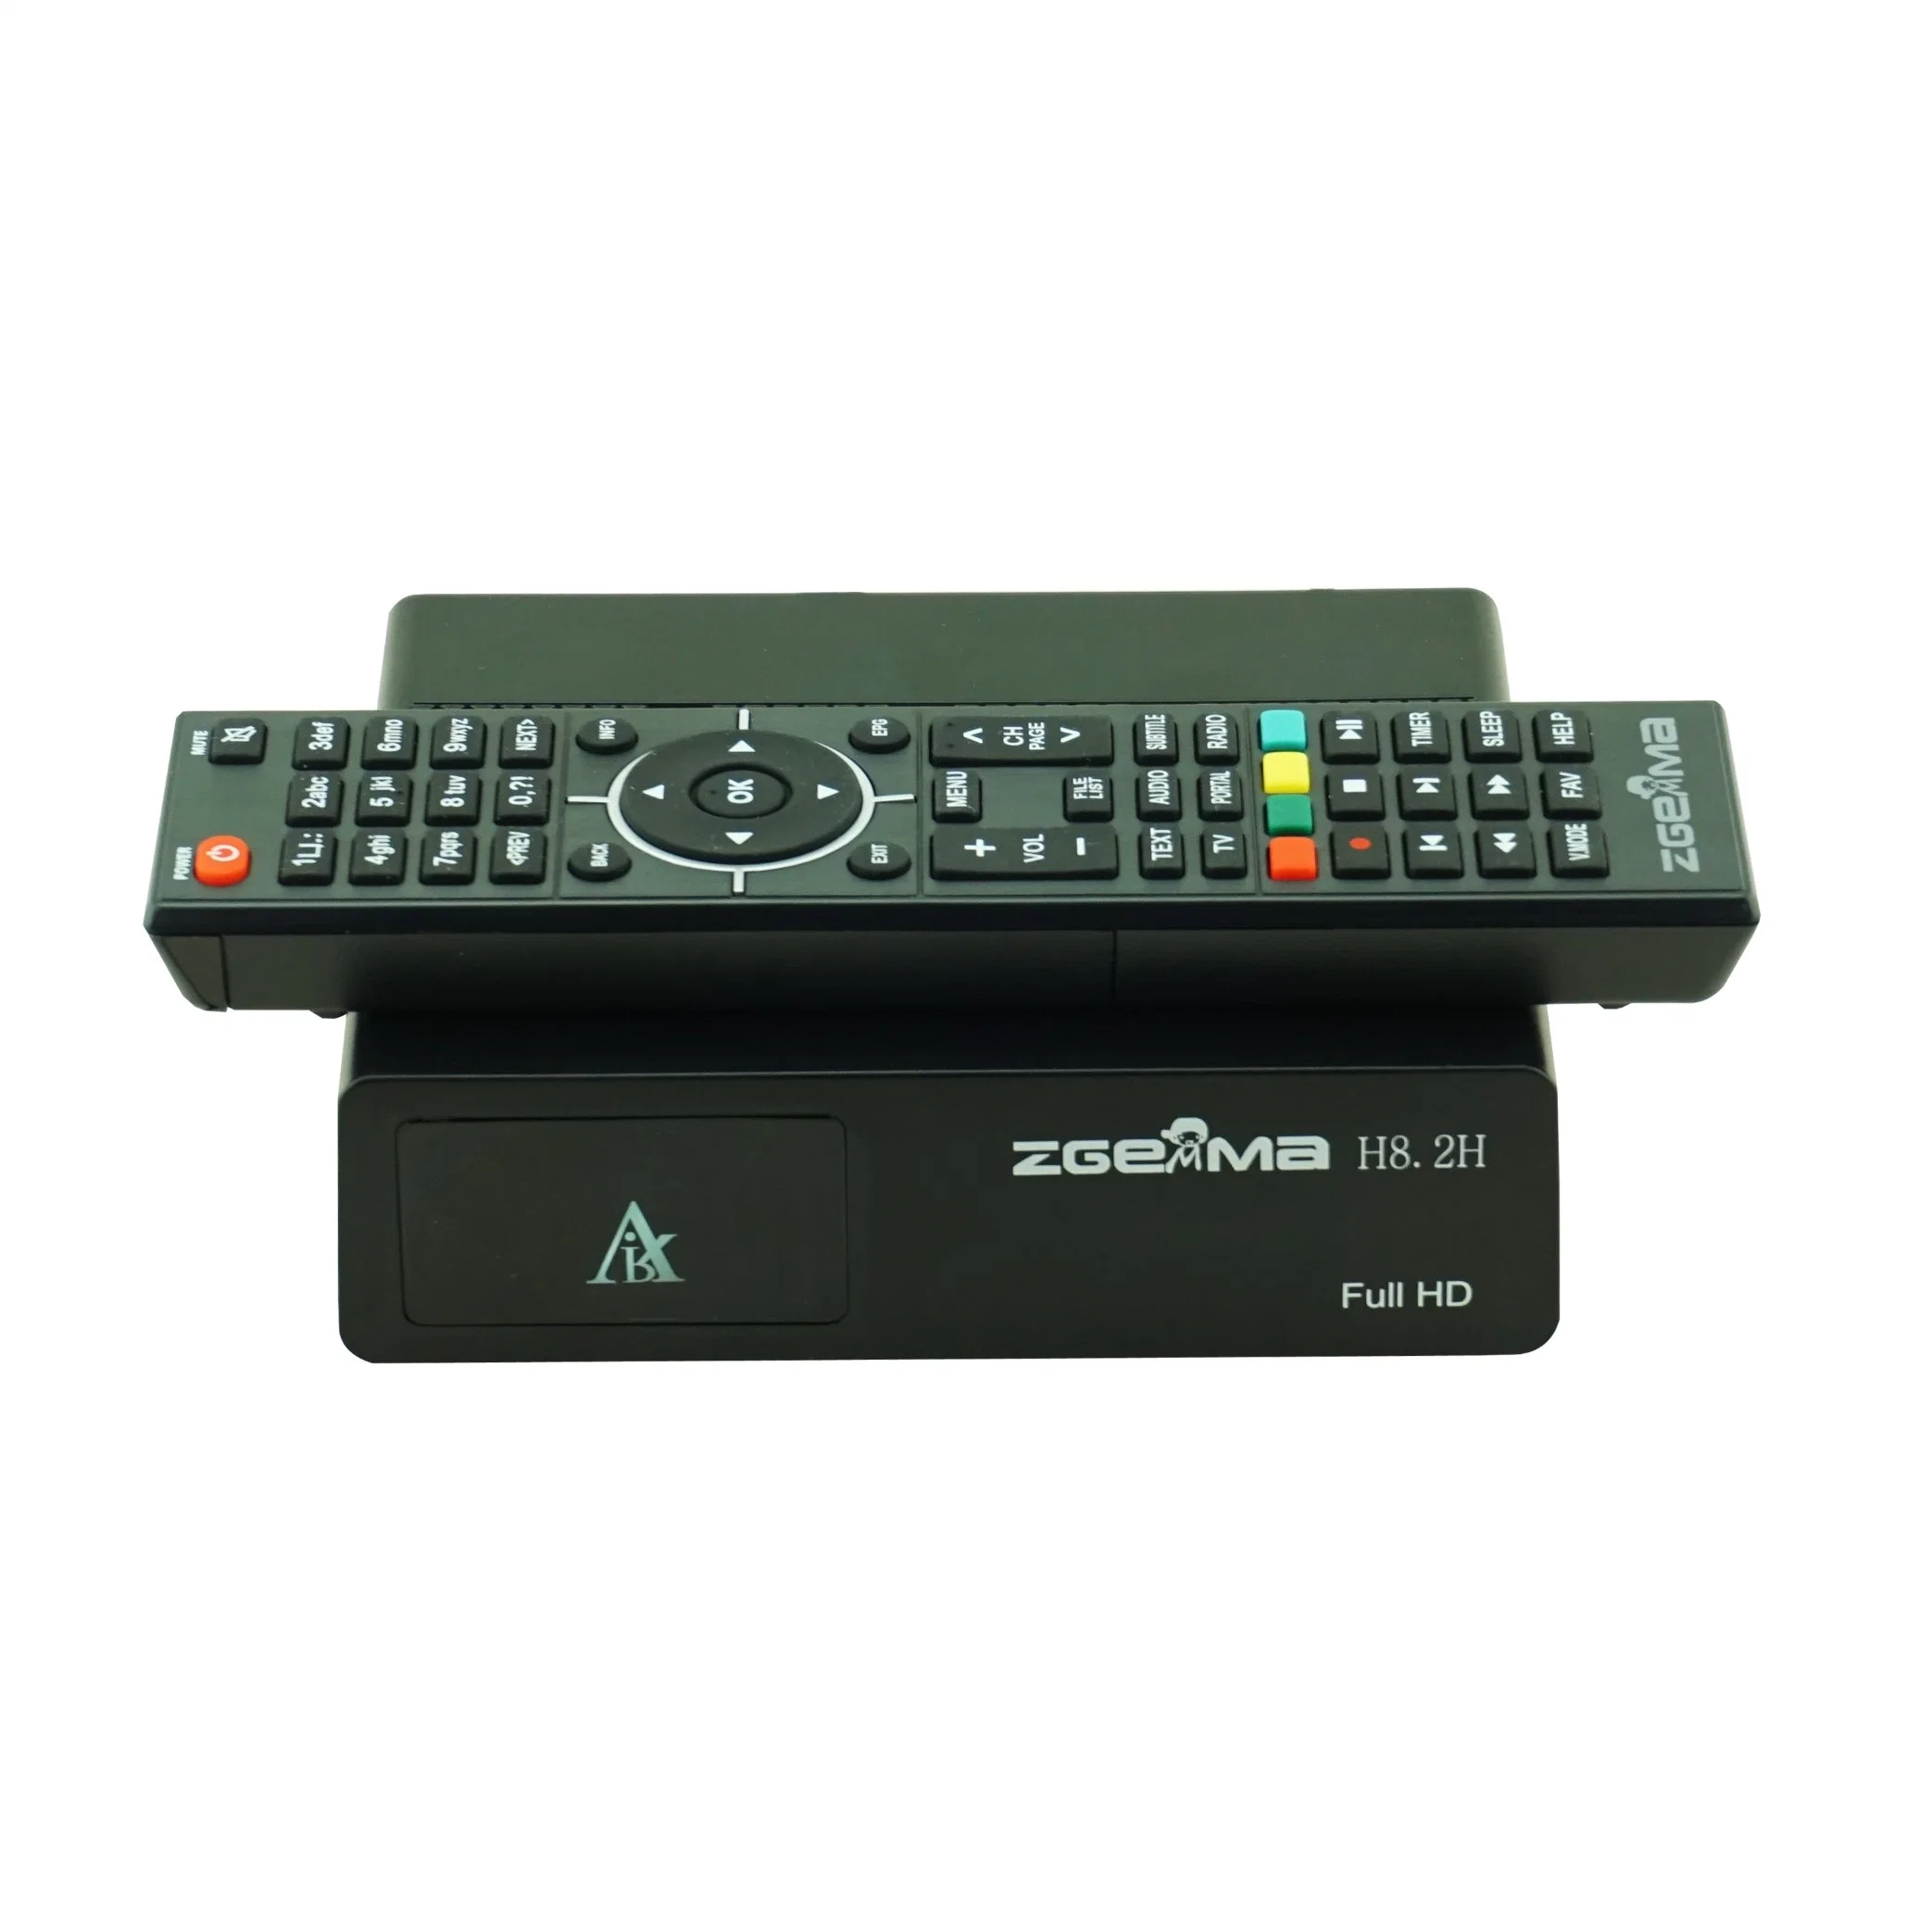 Satellite TV Receiver 1080P@60 Fps Decoding Linux Operating System Zgemma H8.2h DVB-S2X